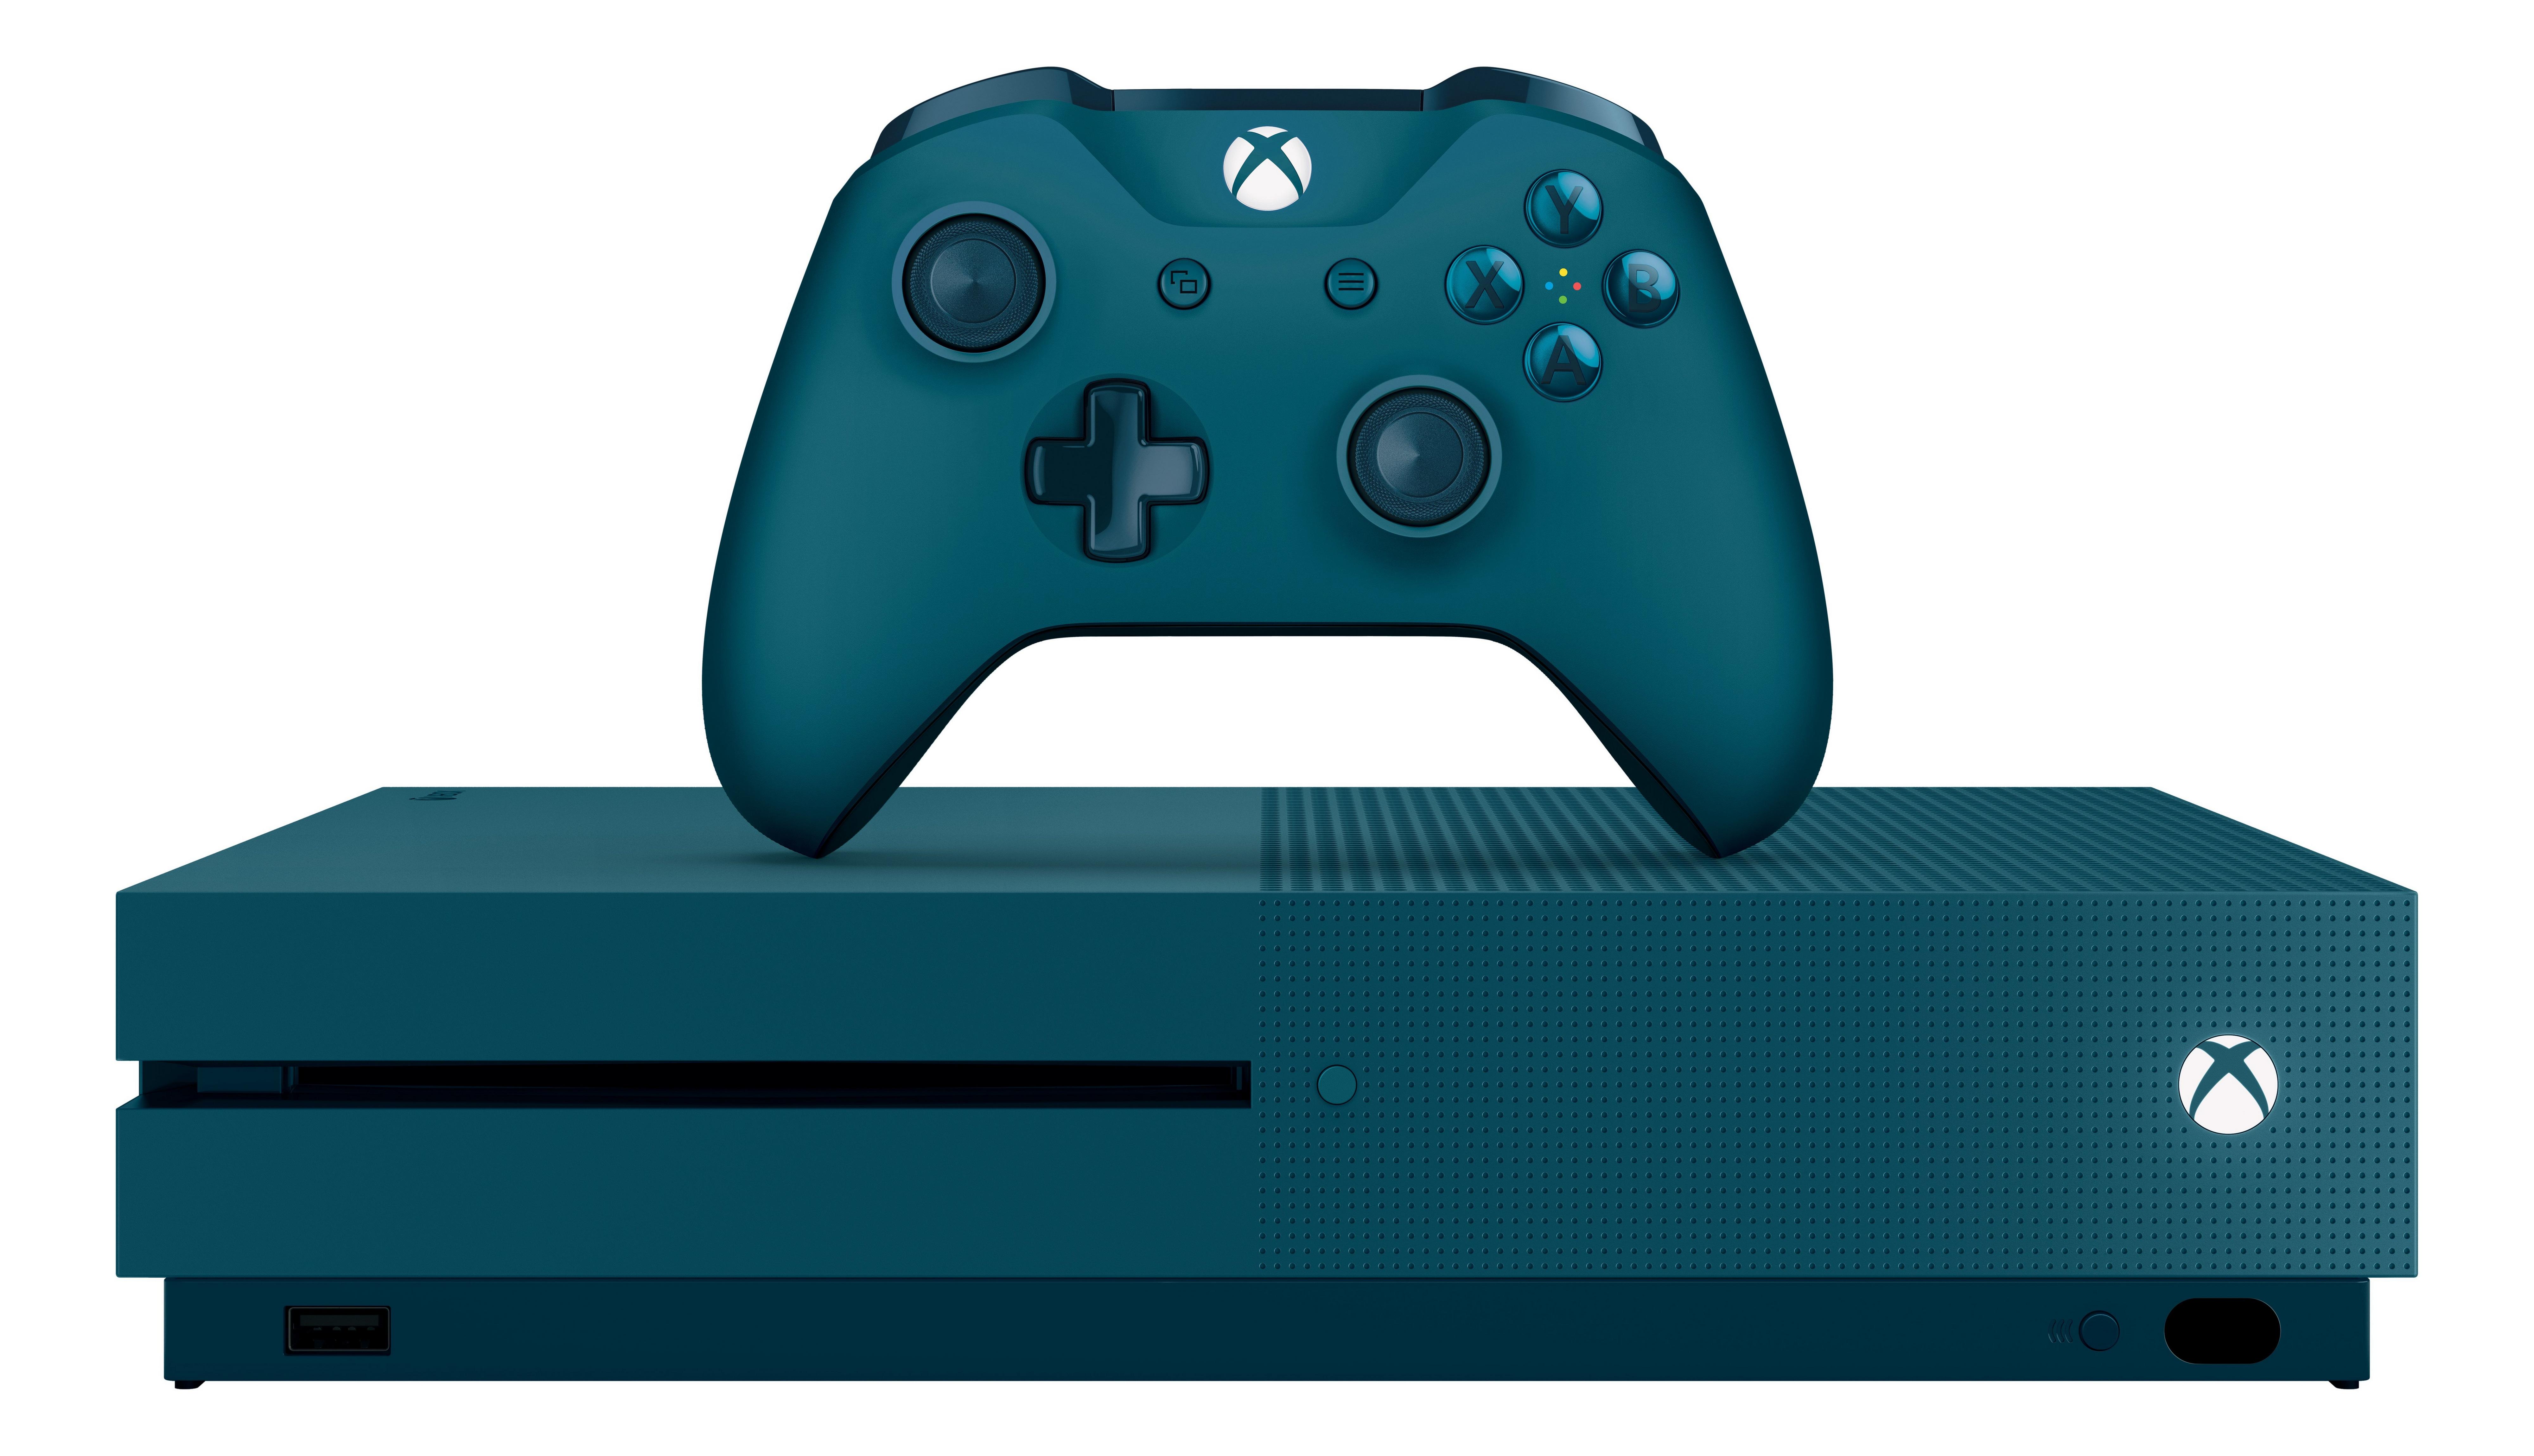 ijs Goederen Yoghurt Microsoft Xbox One S 500GB Console Deep Blue Special Edition | GameStop